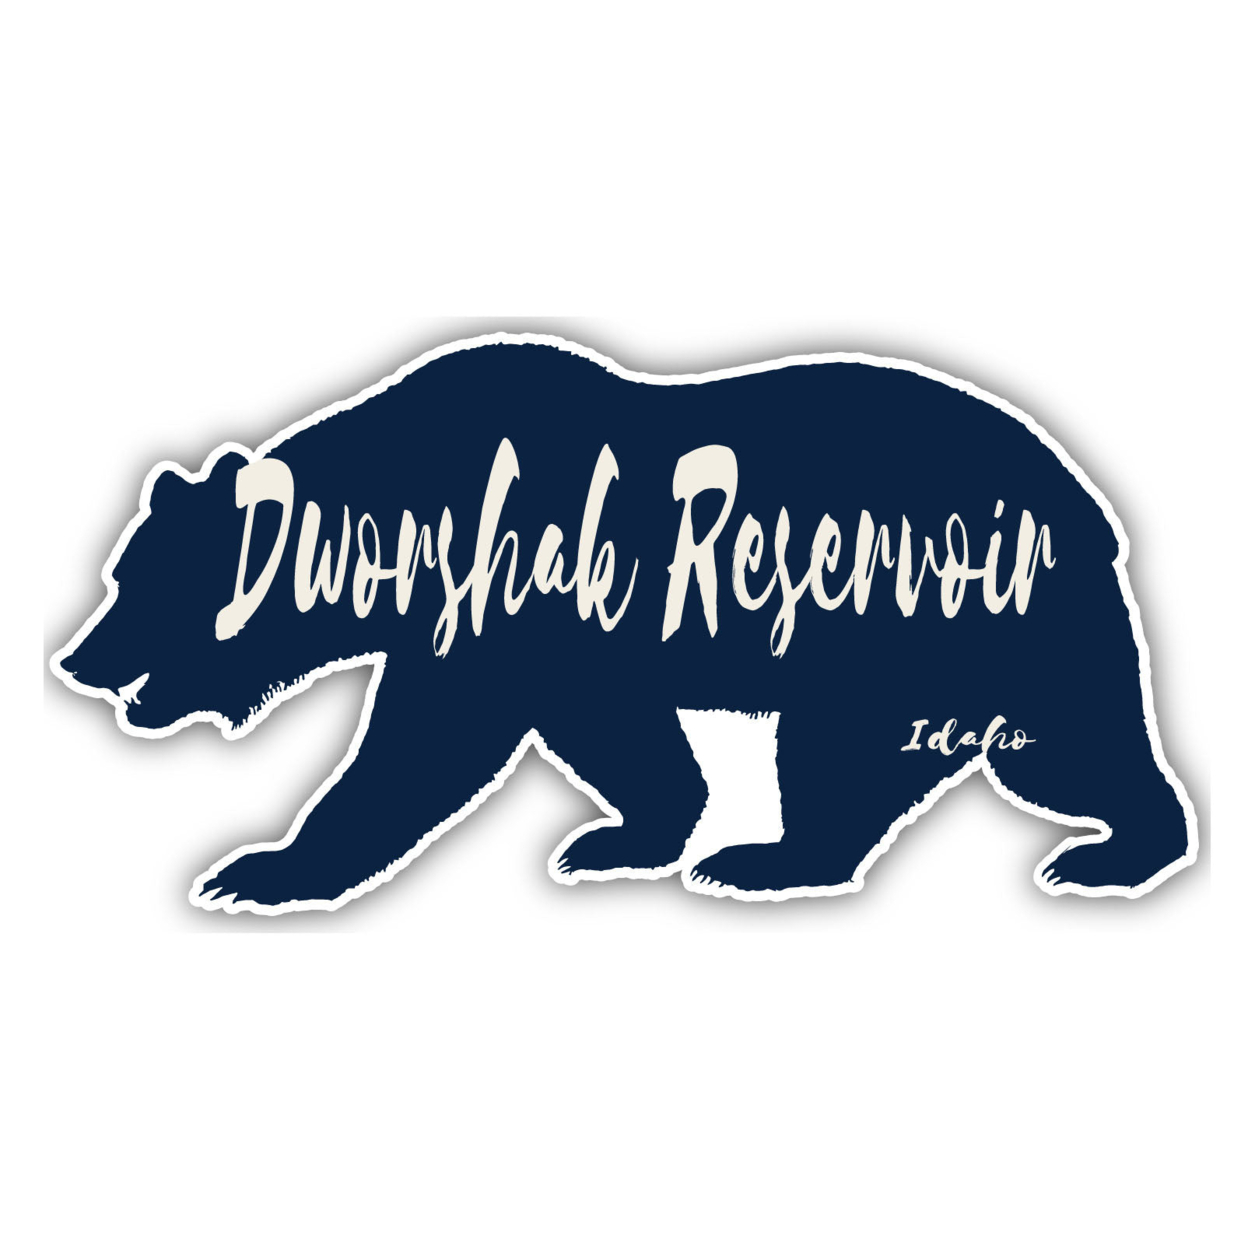 Dworshak Reservoir Idaho Souvenir Decorative Stickers (Choose Theme And Size) - Single Unit, 10-Inch, Tent